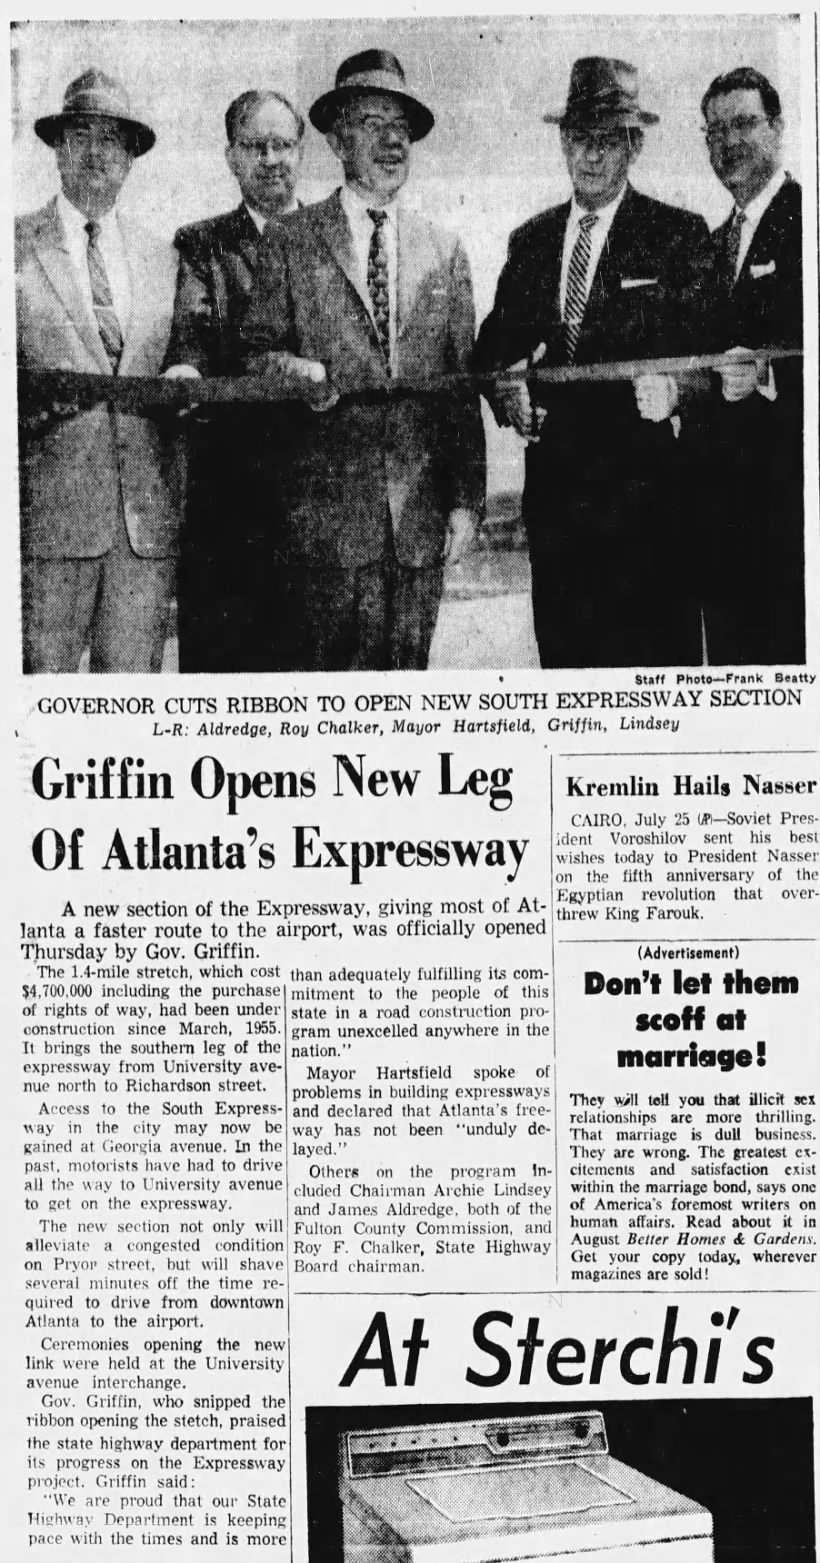 Griffin Opens New Leg Of Atlanta's Expressway